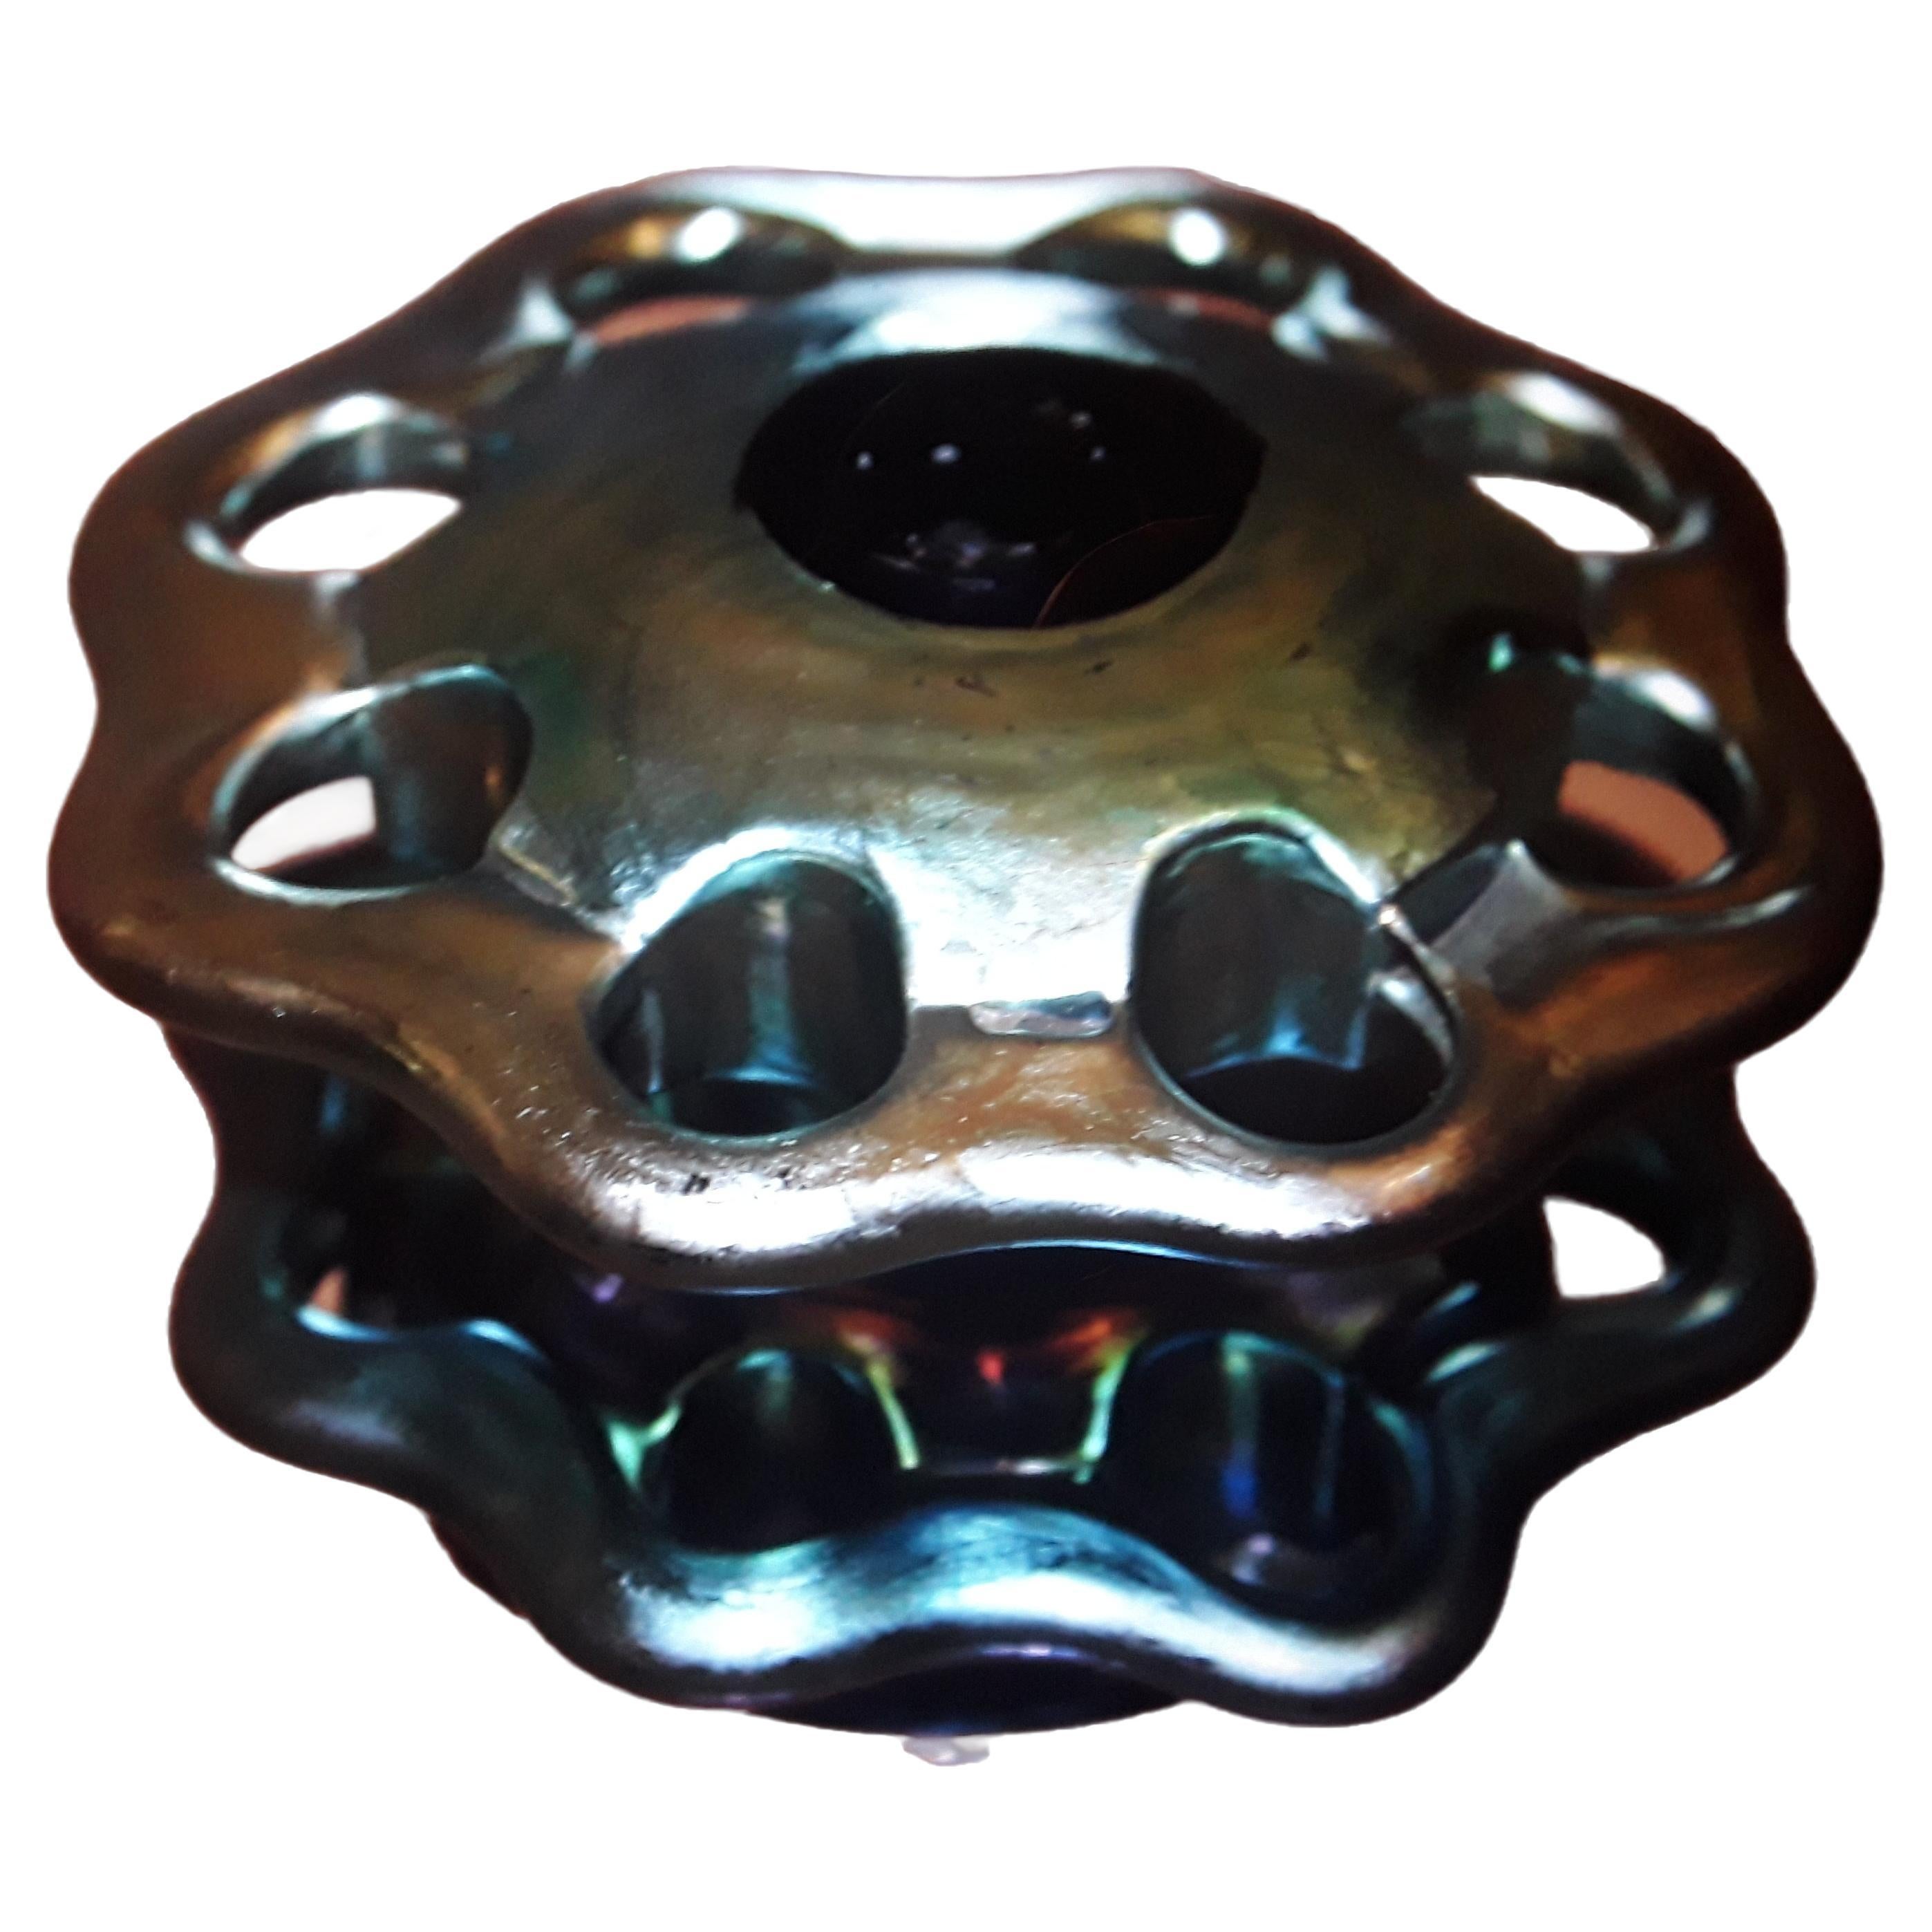 1930s Art Deco Frederic Carders Blue Aurene Bud Vase [Frog] by Steuben Art Glass